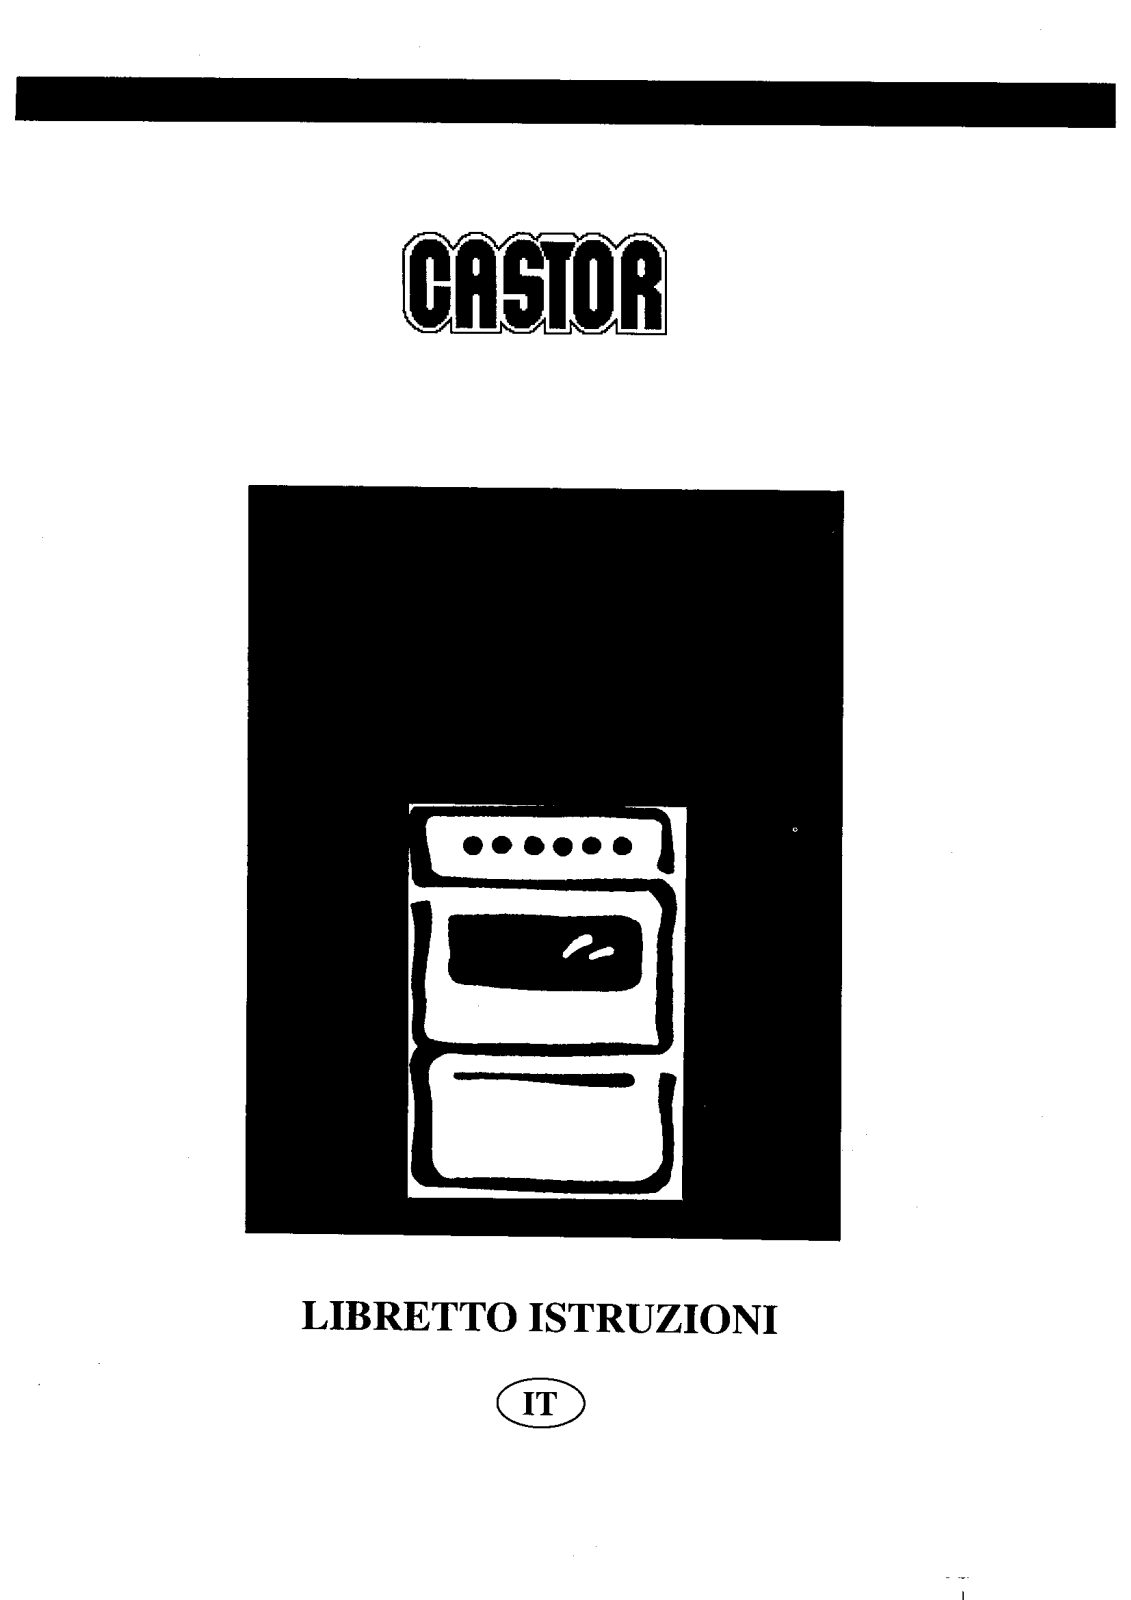 Castor C5, CB50, C50, C50SA User Manual